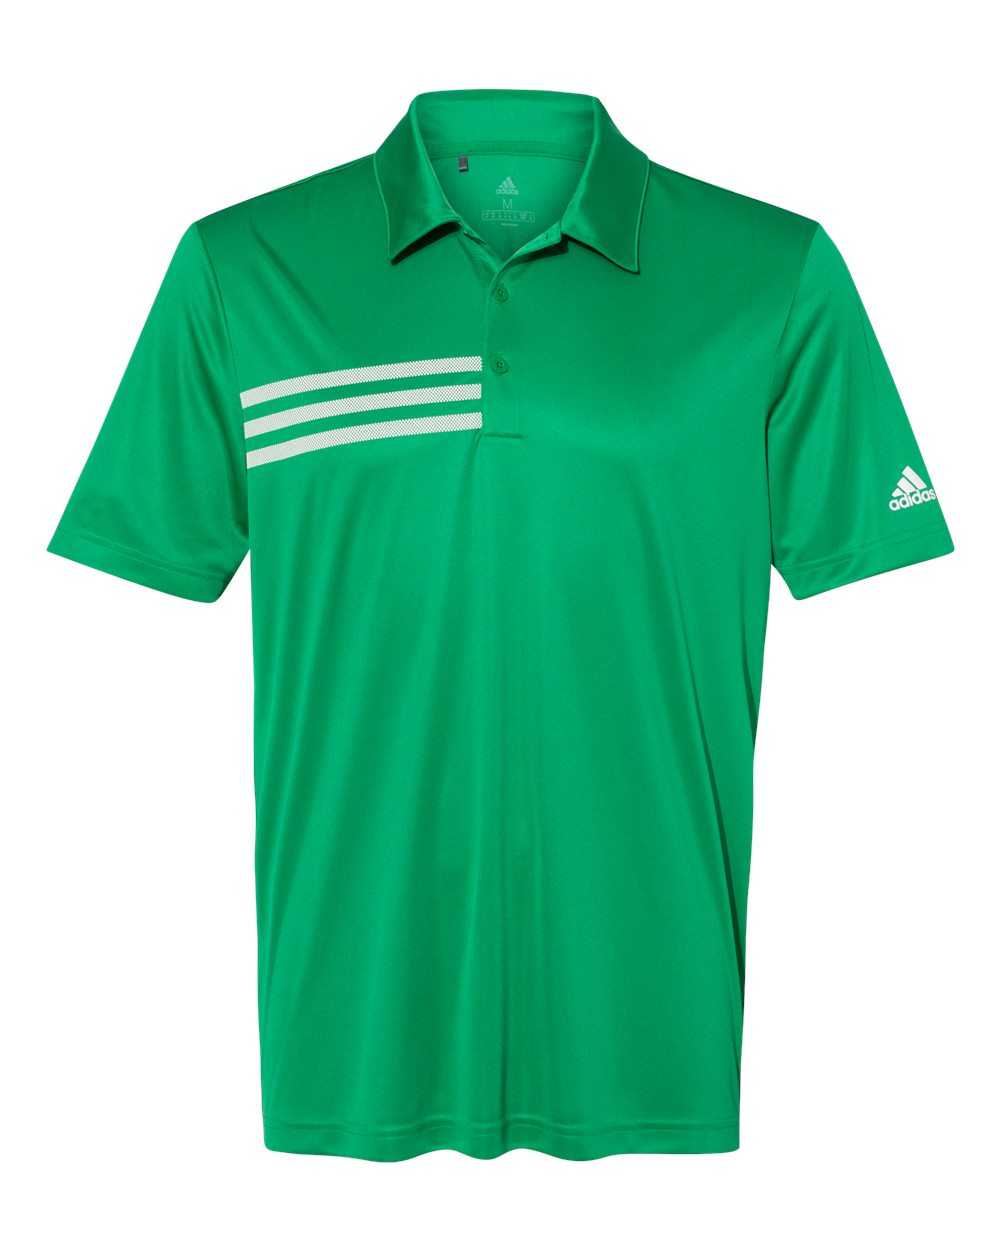 Adidas A324 3-Stripes Chest Sport Shirt - Team Green White - HIT a Double